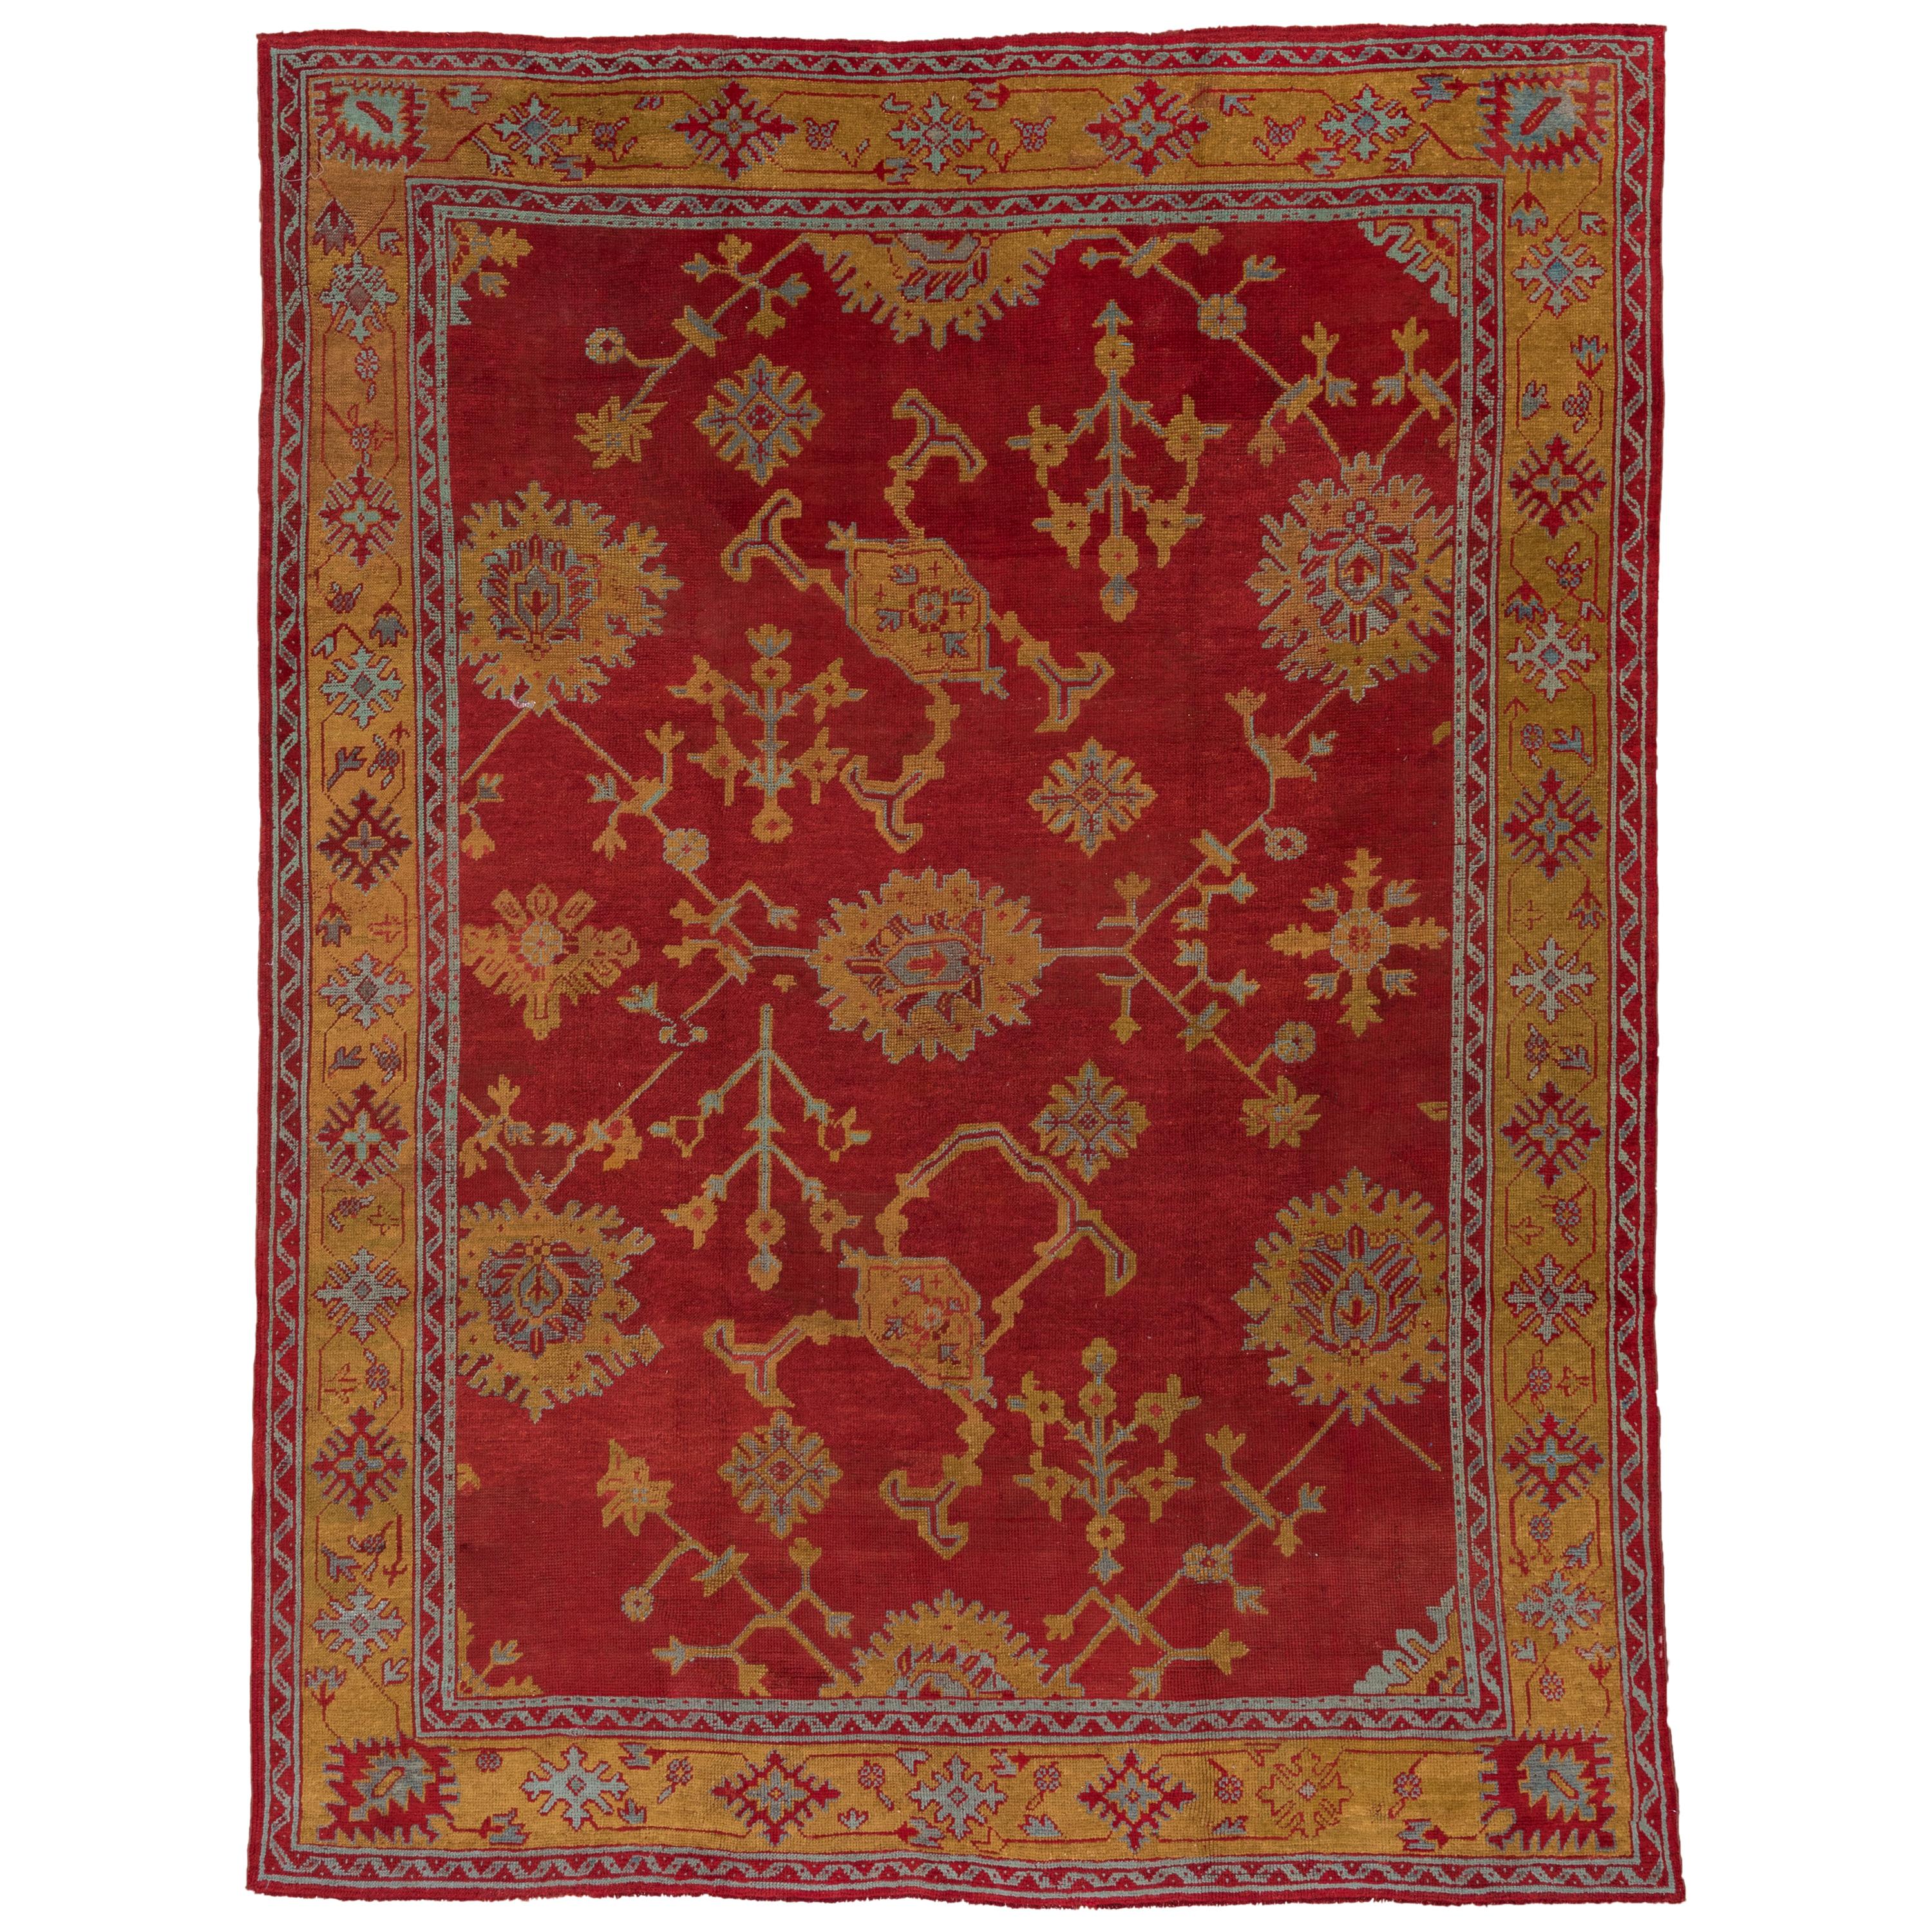 Antique Turkish Red Oushak Carpet, Yellow Borders, circa 1910s